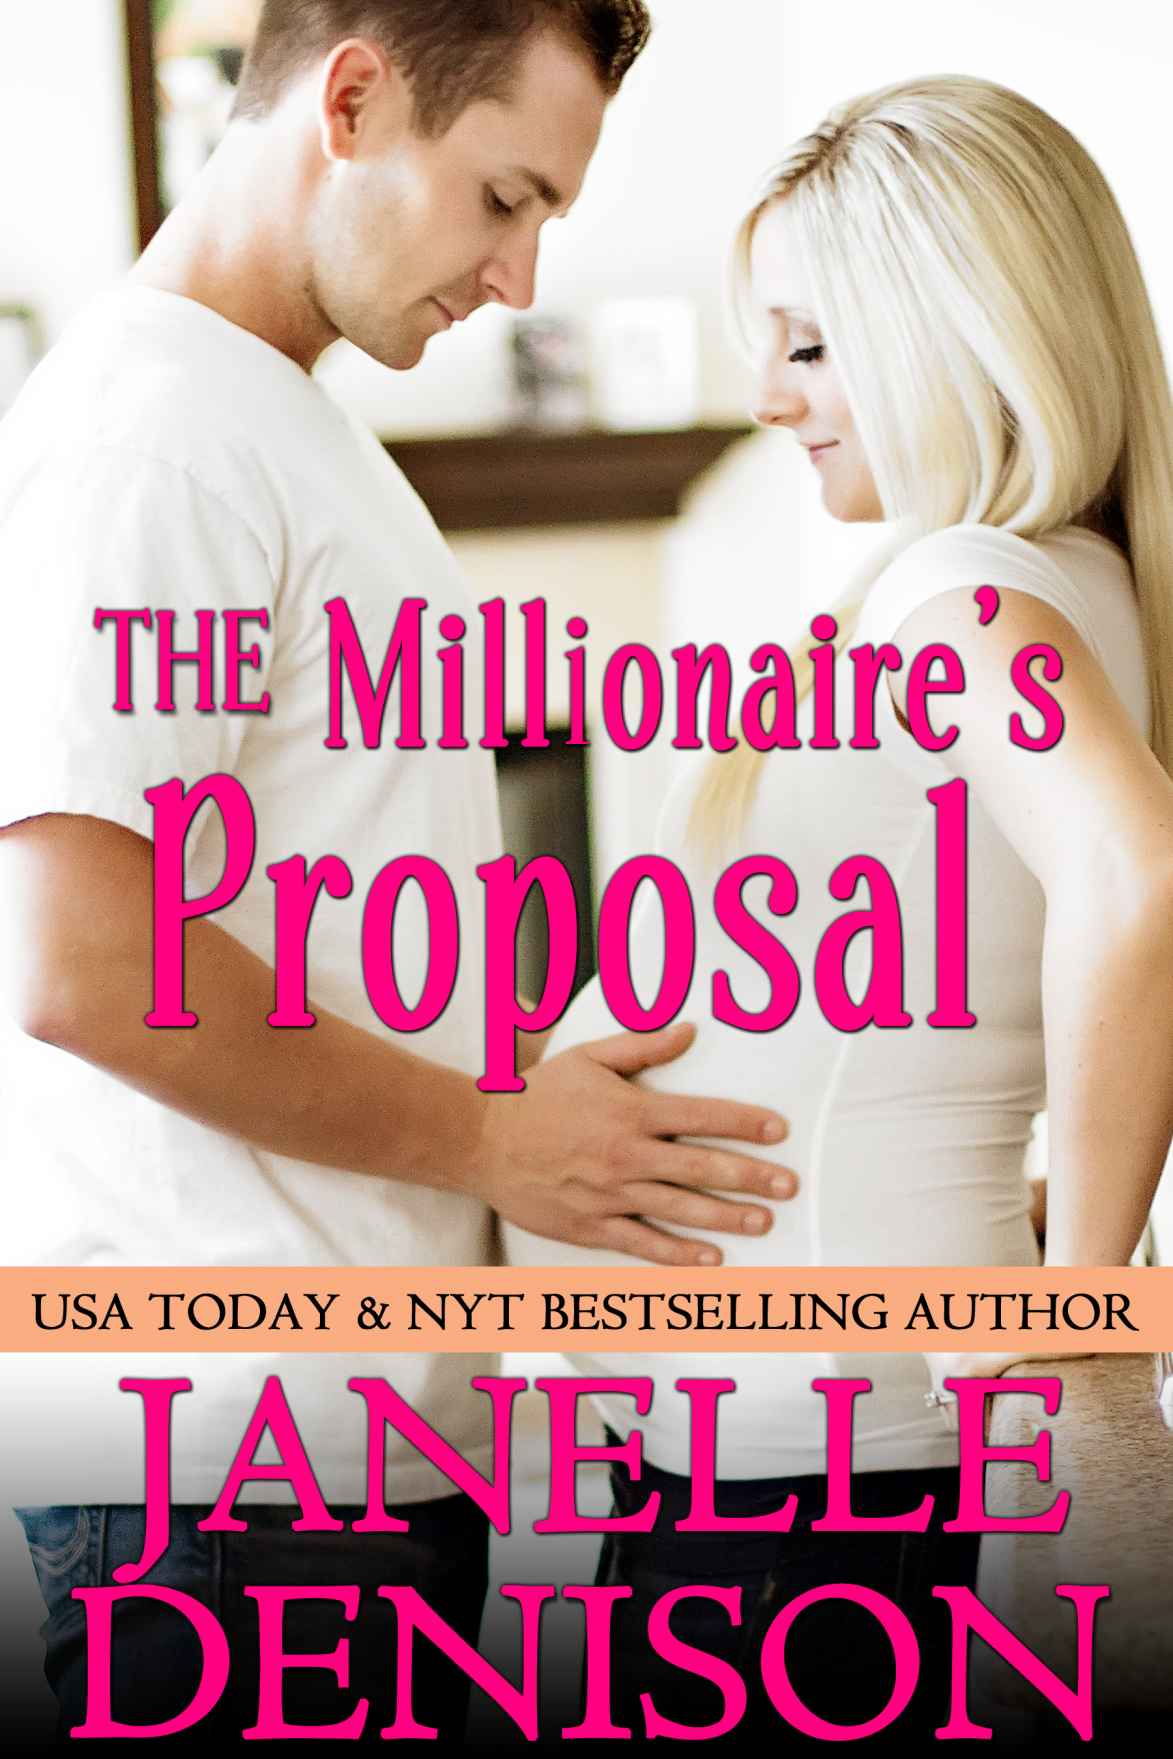 The Millionaire's Proposal by Janelle Denison